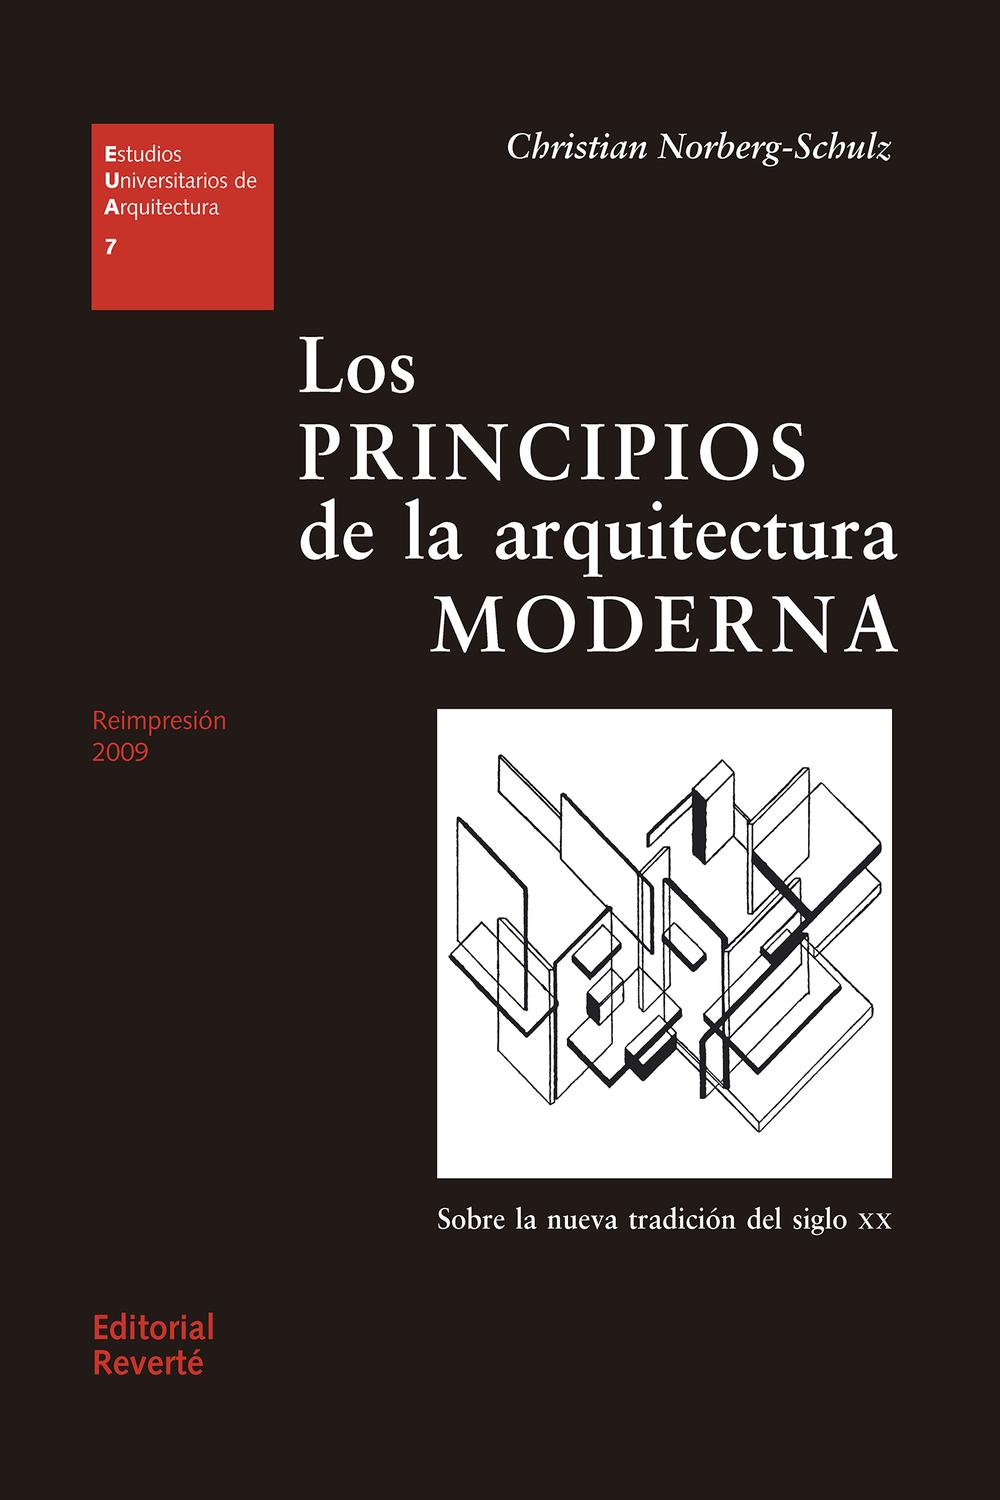 Los principios de la arquitectura moderna - Christian Norberg-Schulz, Jorge Sainz